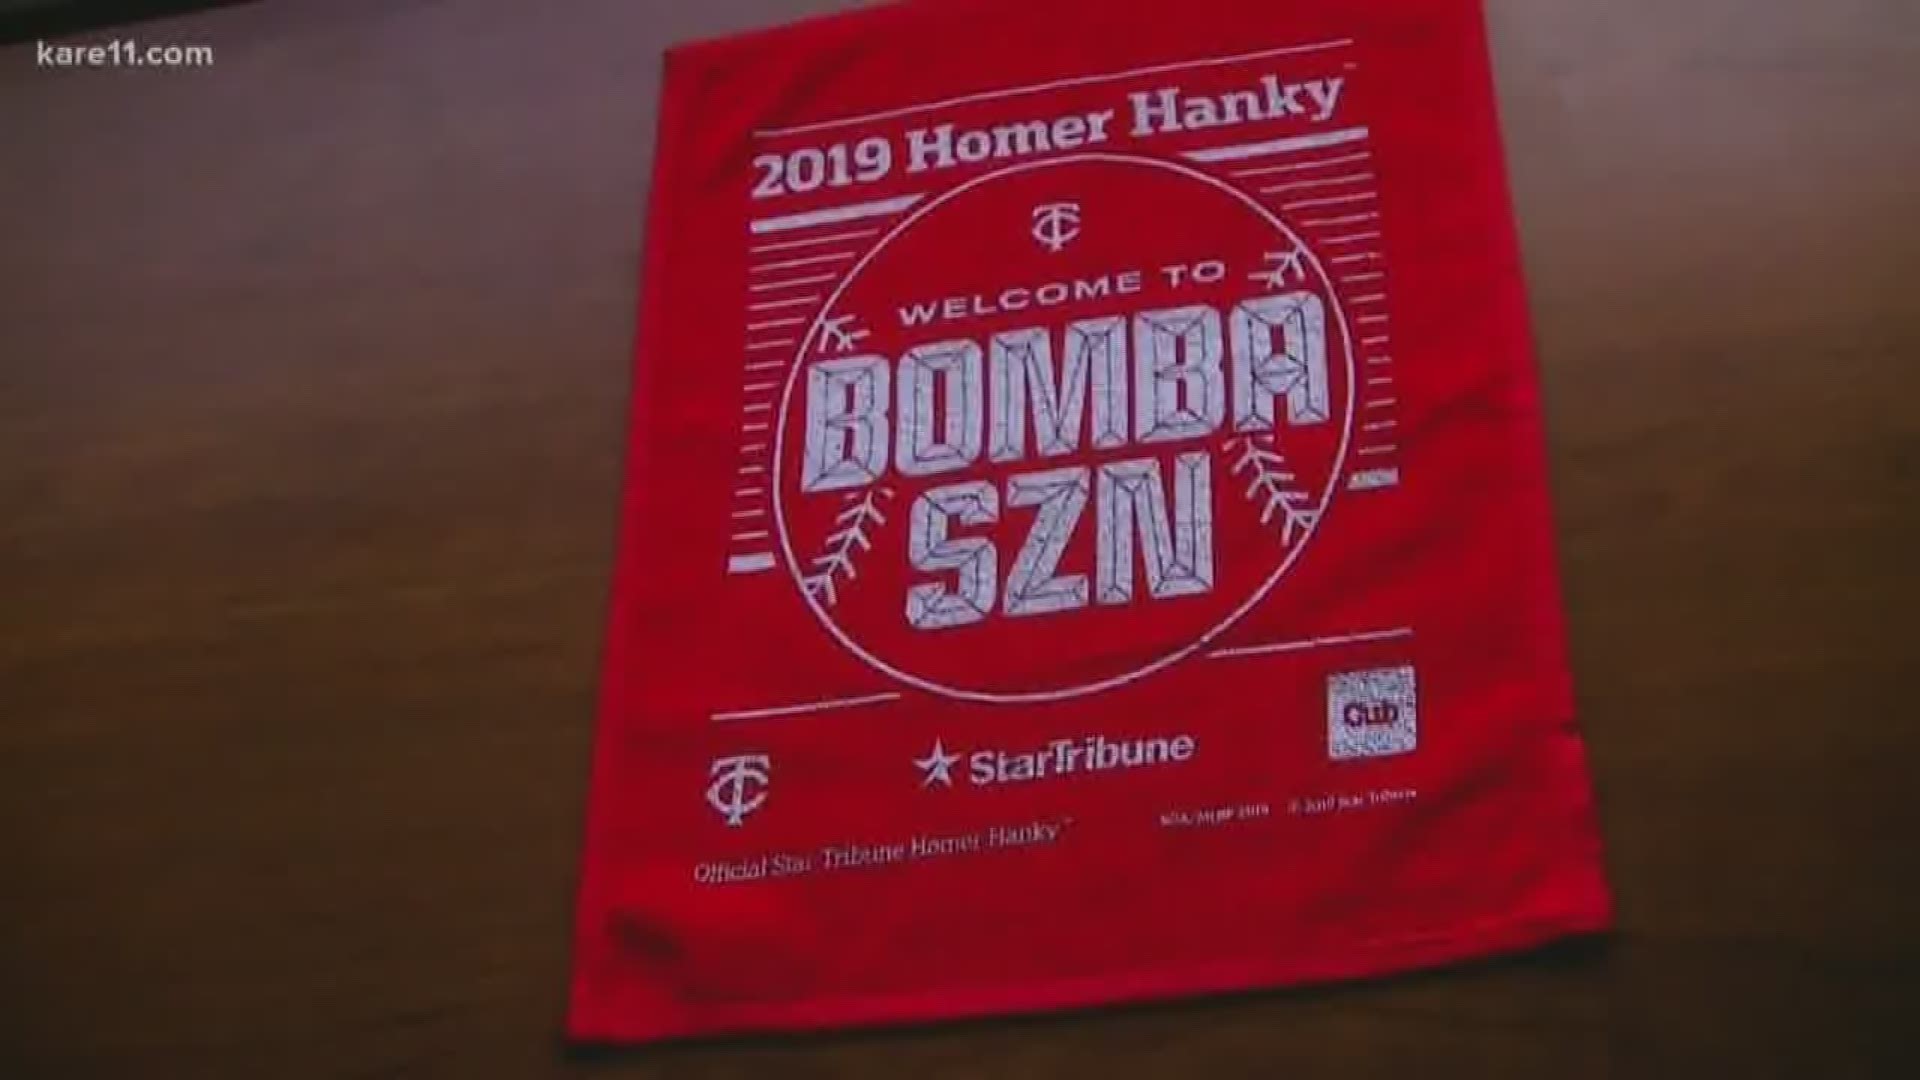 Twins Homer Hanky returns ahead of 2019 postseason